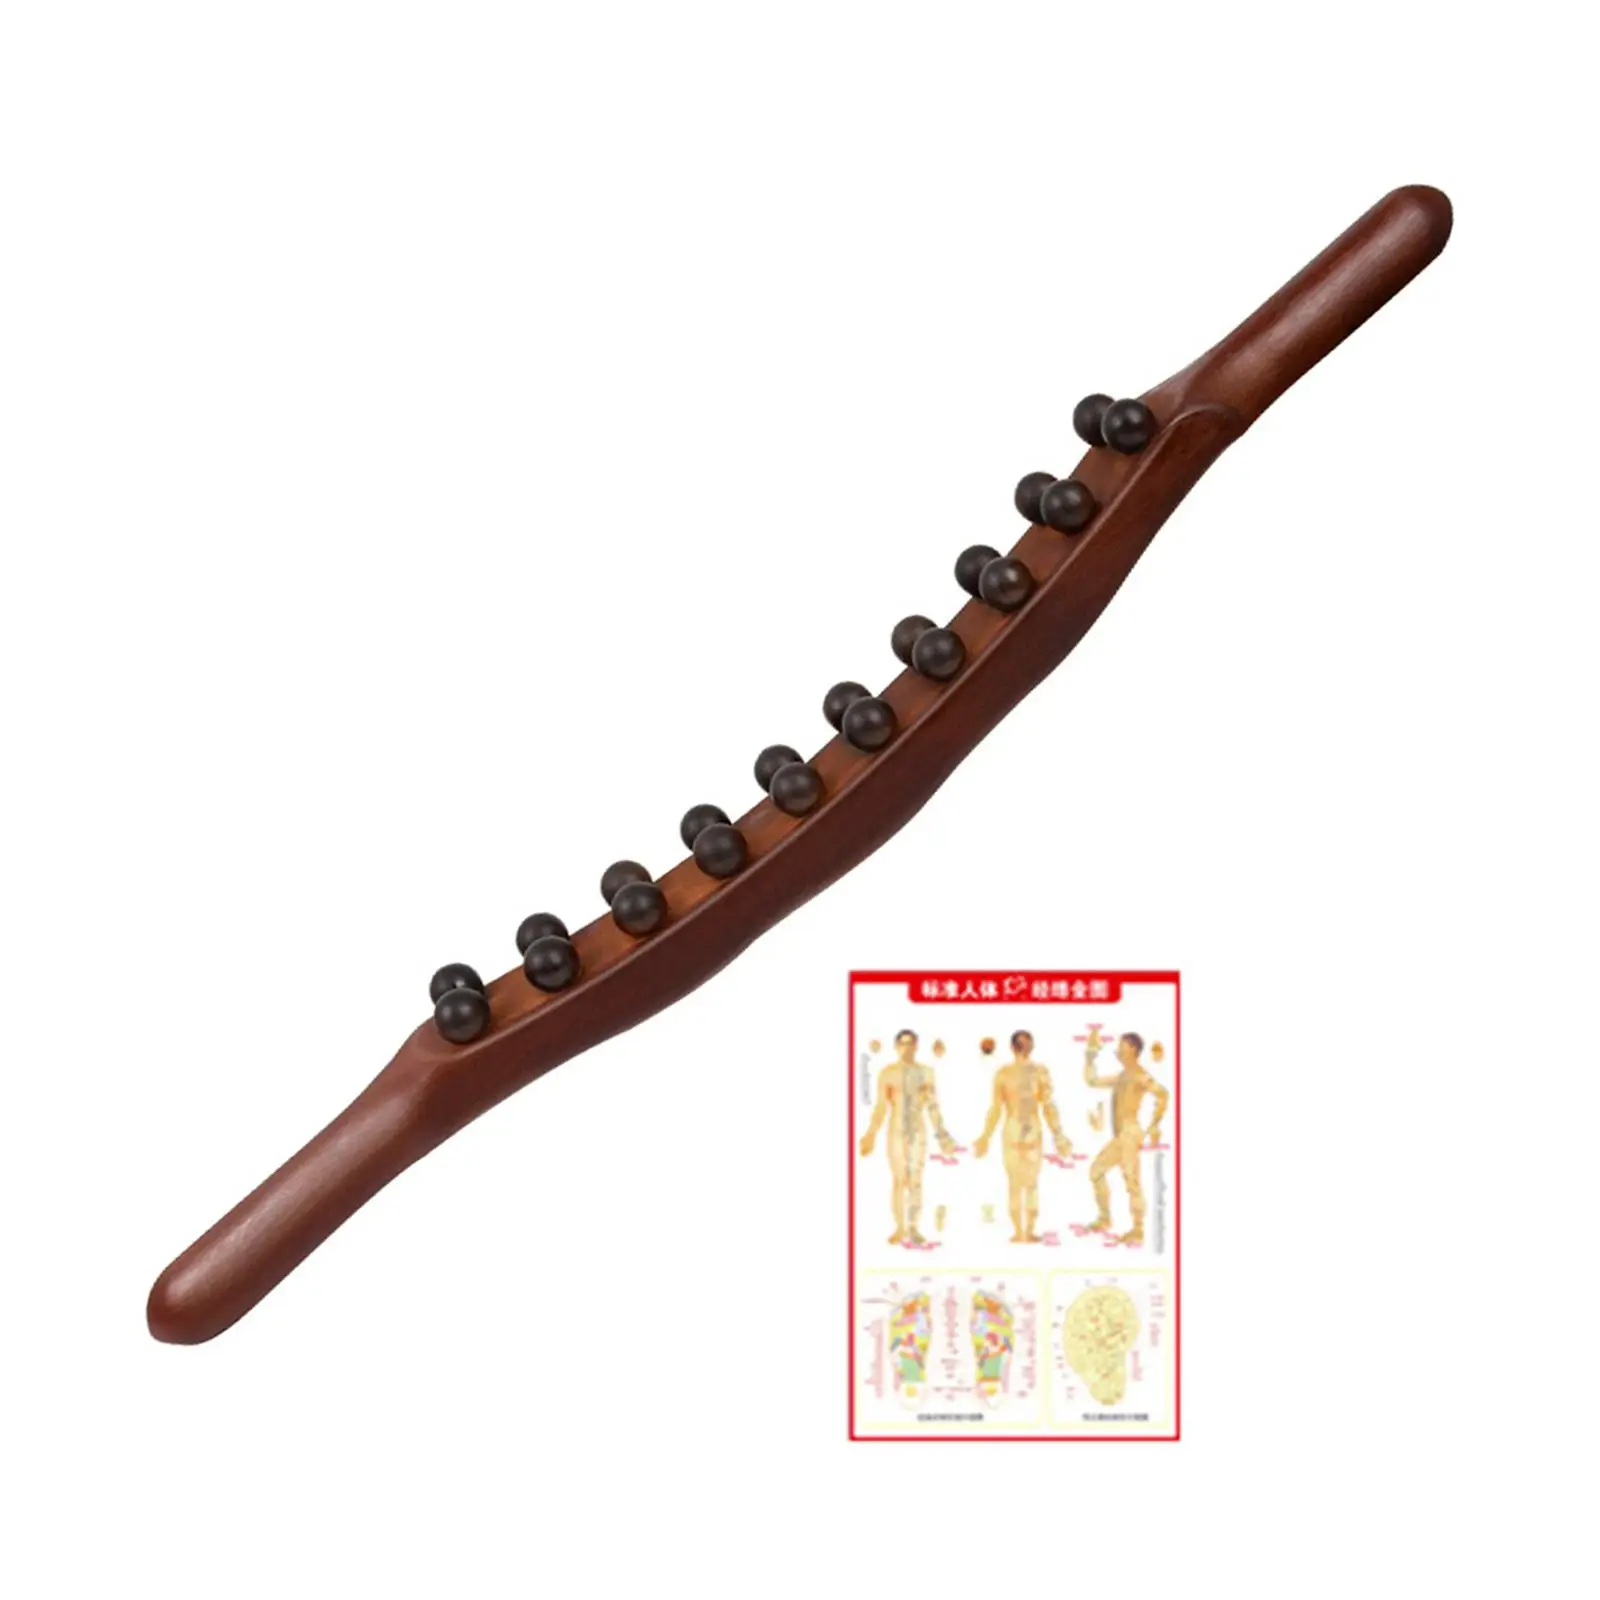 

Professional Wood Massage Roller Stick Cellulite Reduction Body Sculpting Tools Handheld for Neck SPA Waist Shoulder Abdomen